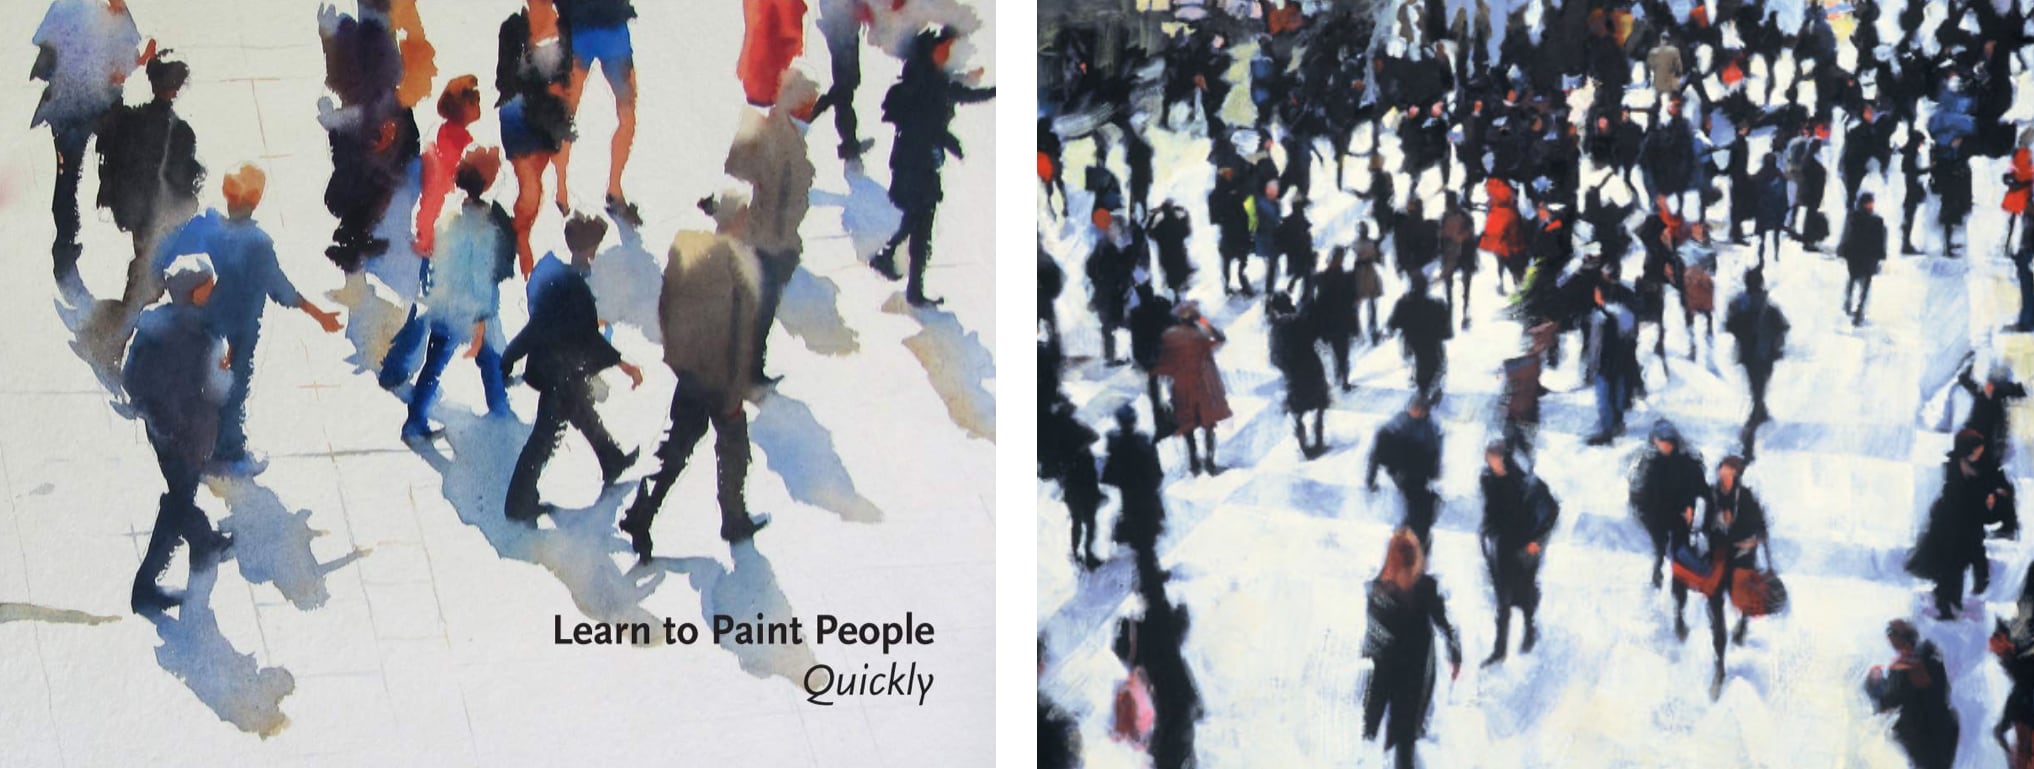 paint-people-quickly-egs.jpg